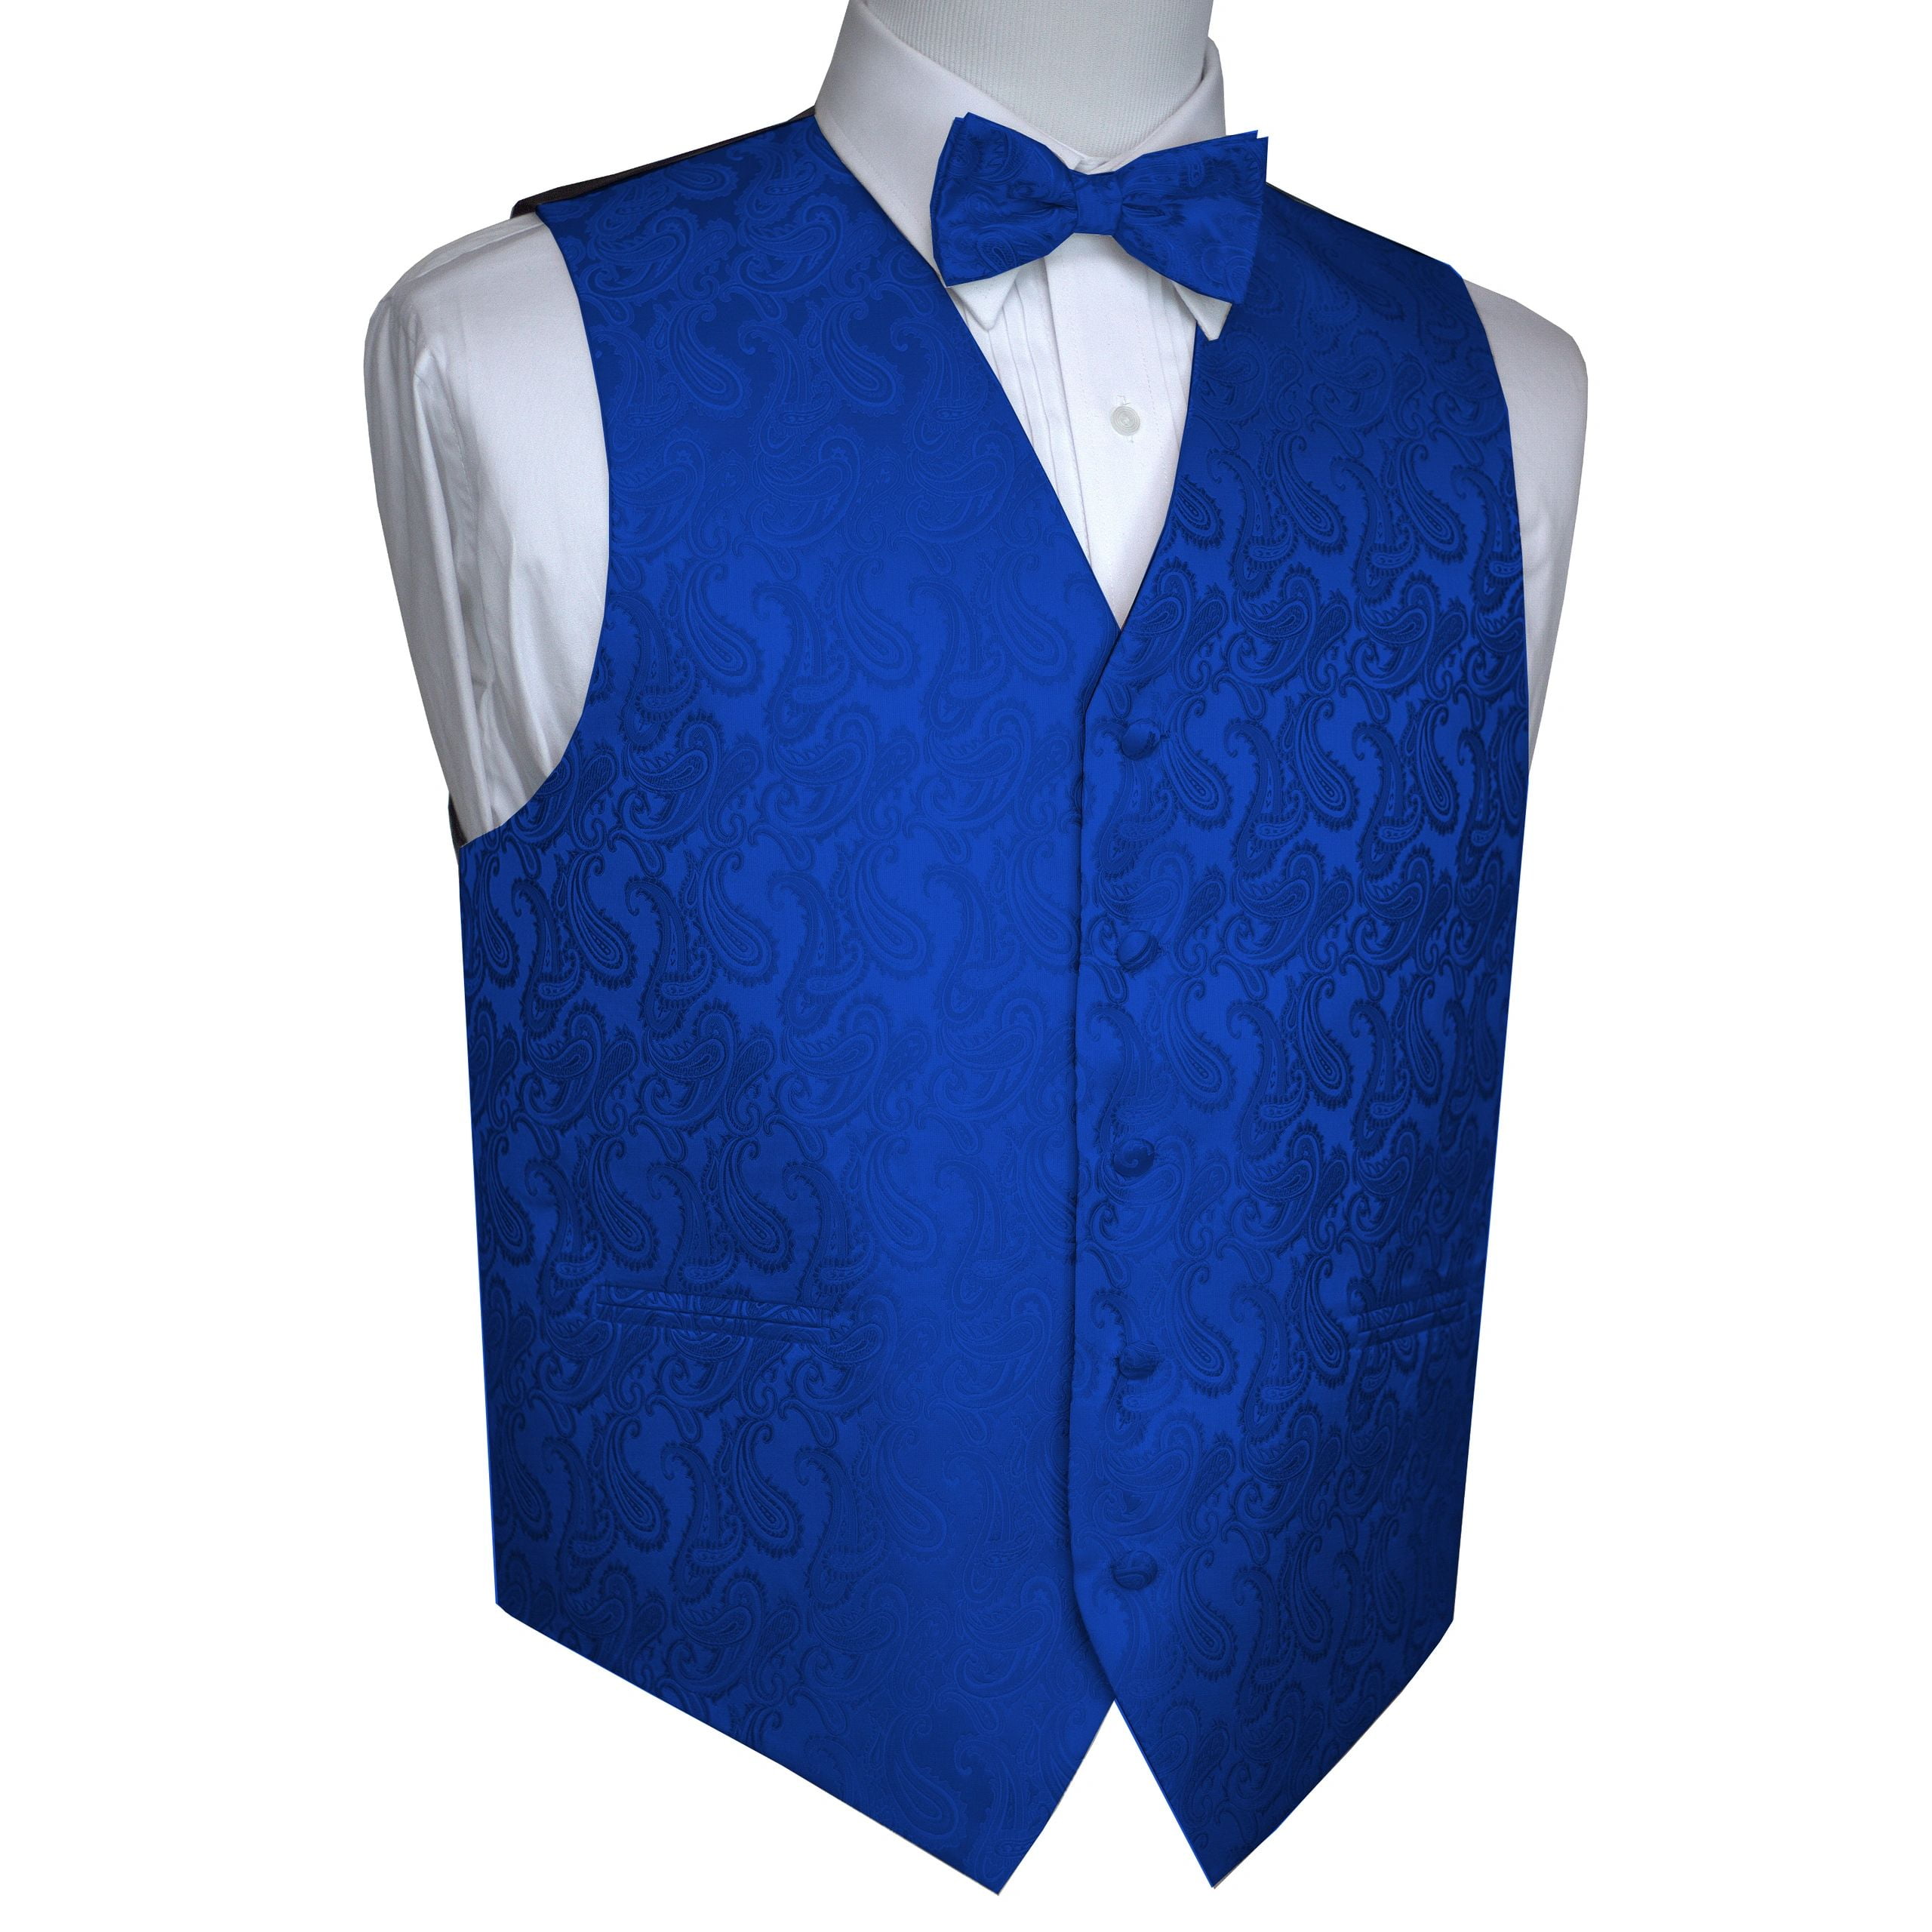 New Brand Q Men's Vest Tuxedo Waistcoat_Necktie & Hankie Set royal blue XS-6XL 